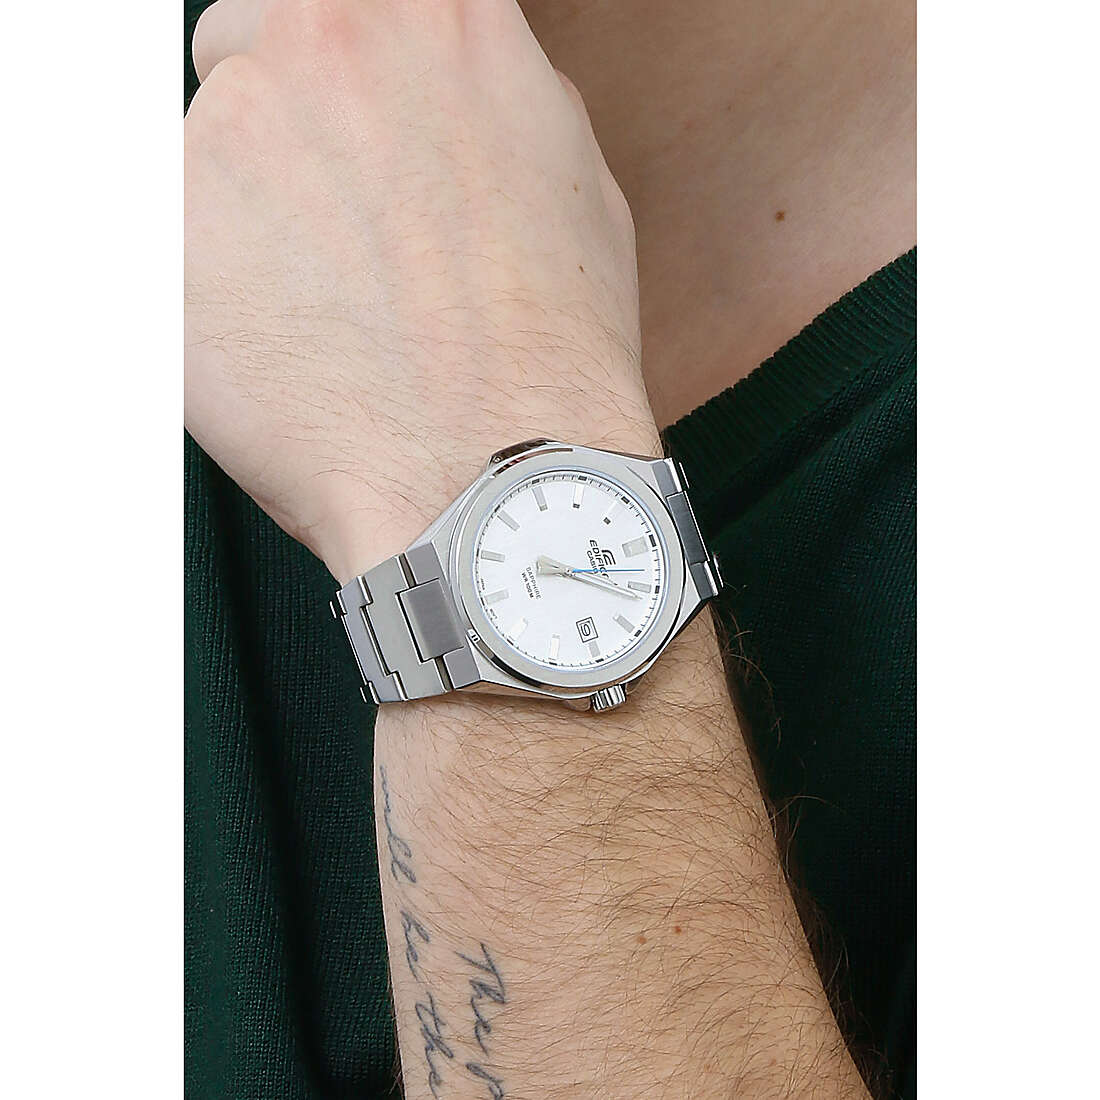 Casio chronographs Edifice man EFB-108D-7AVUEF wearing